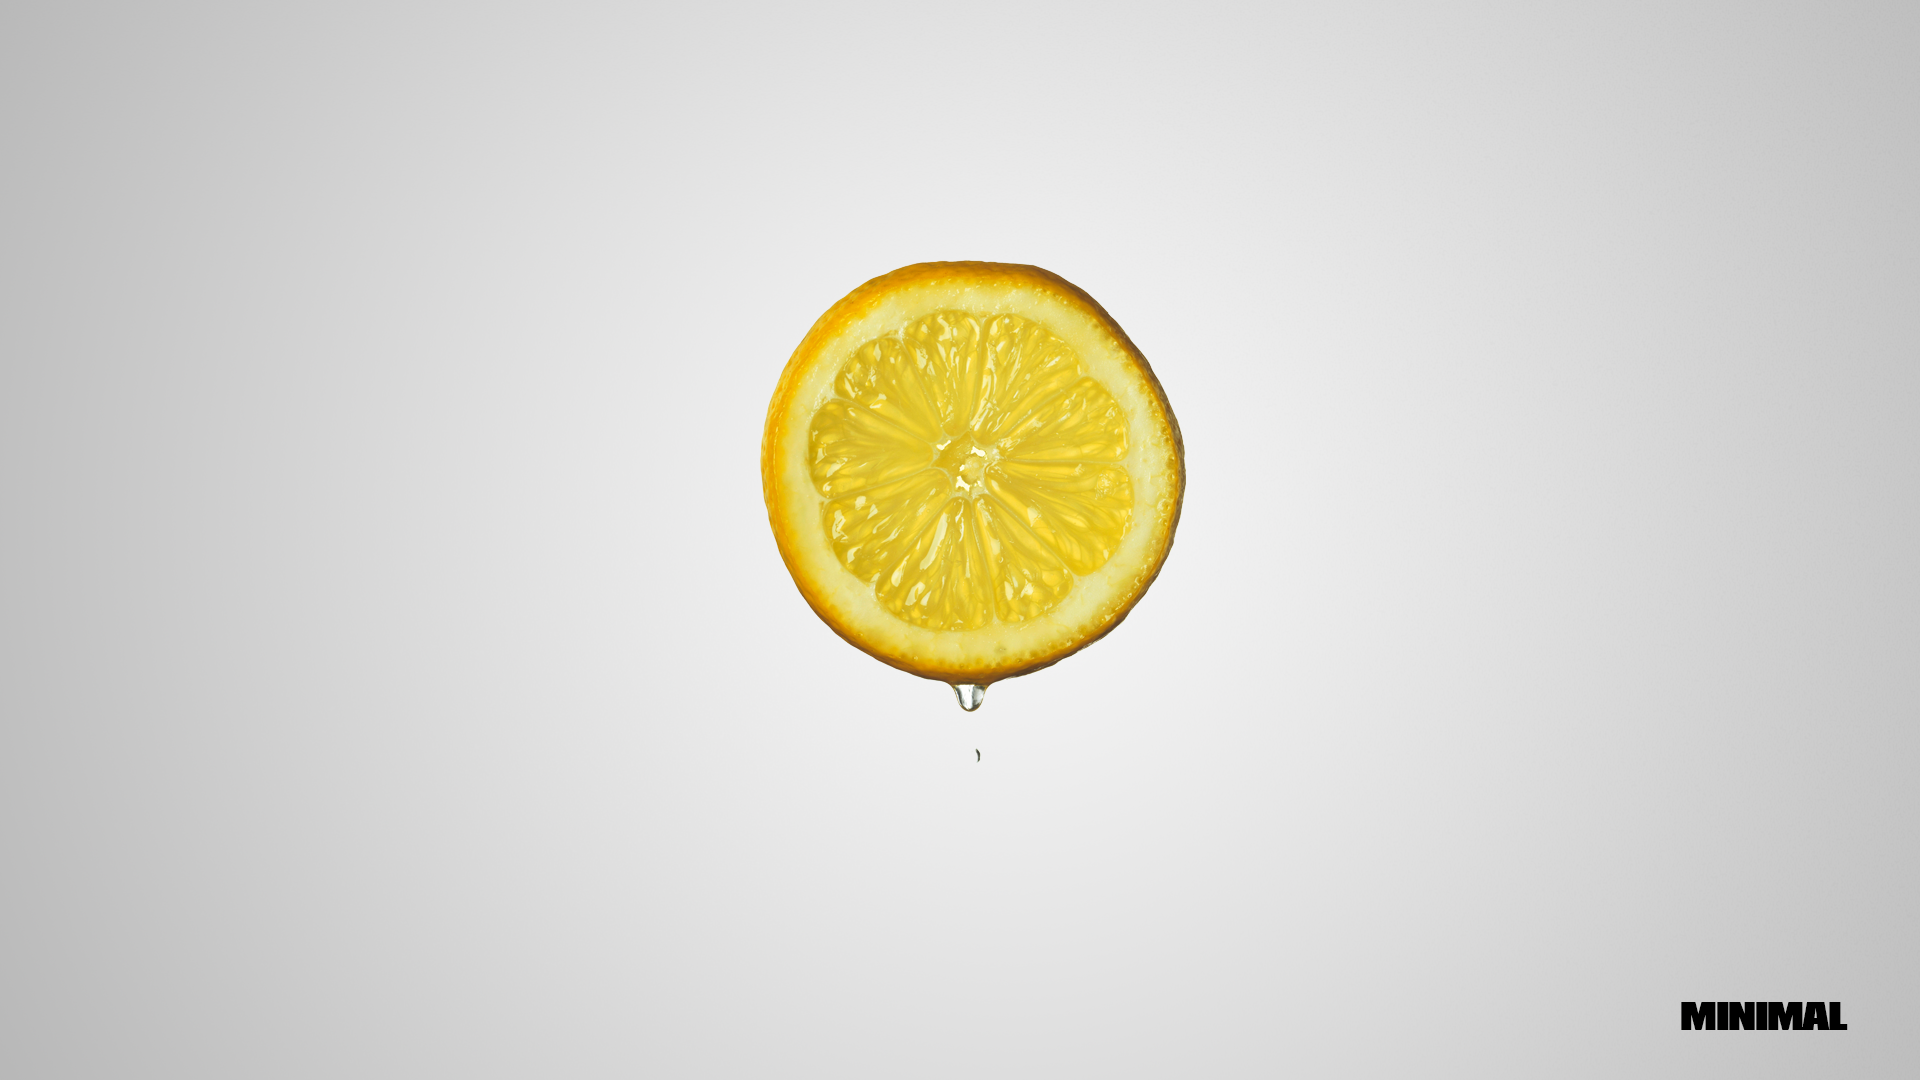 General 1920x1080 fruit minimalism techno Tatof lemons simple background white background food water drops